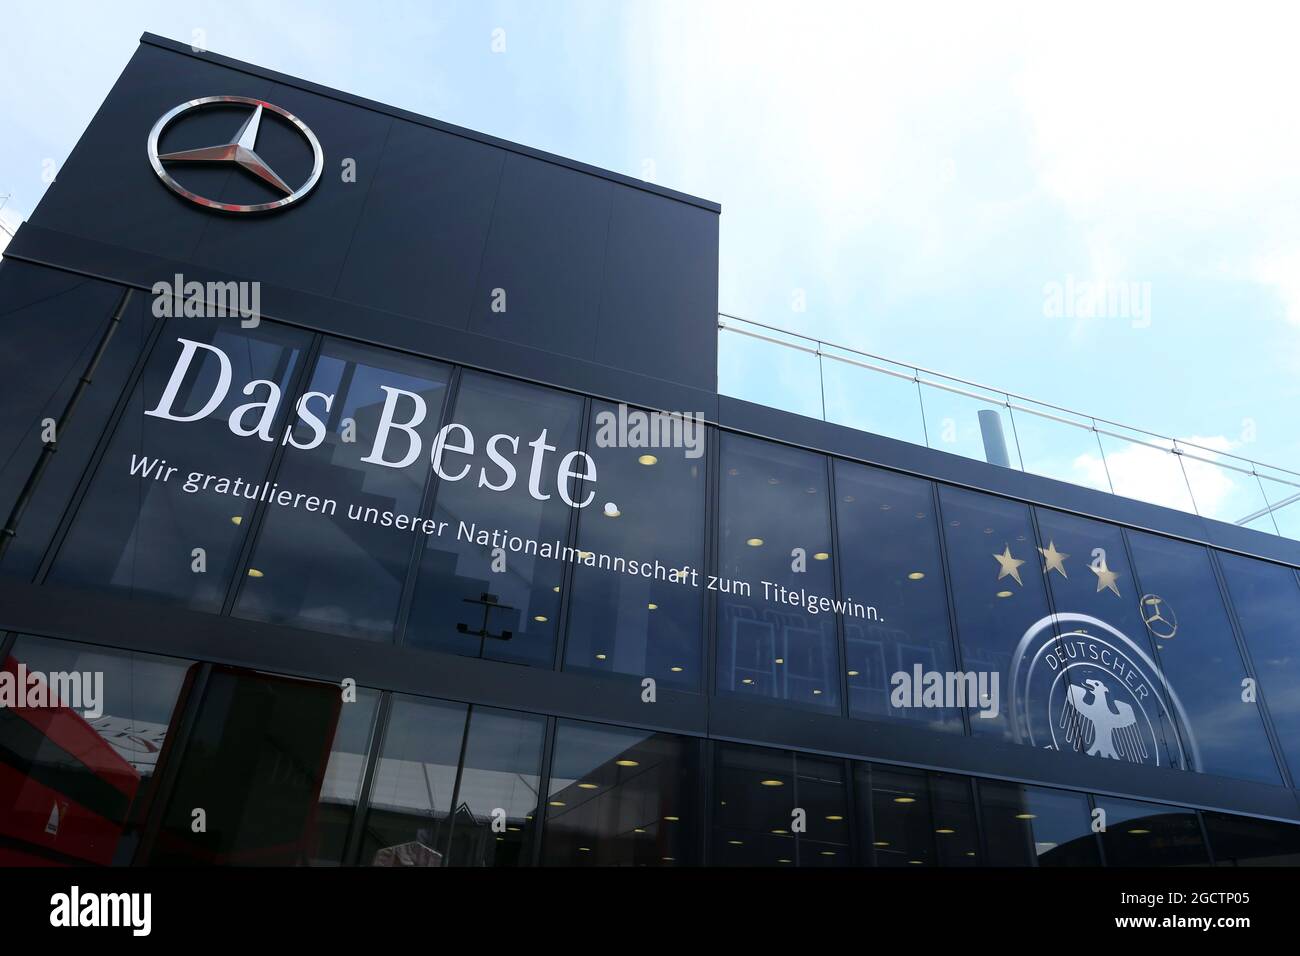 The Mercedes AMG F1 motorhome celebrates Germany's 2014 FIFA World Cup success. German Grand Prix, Thursday 17th July 2014. Hockenheim, Germany. Stock Photo